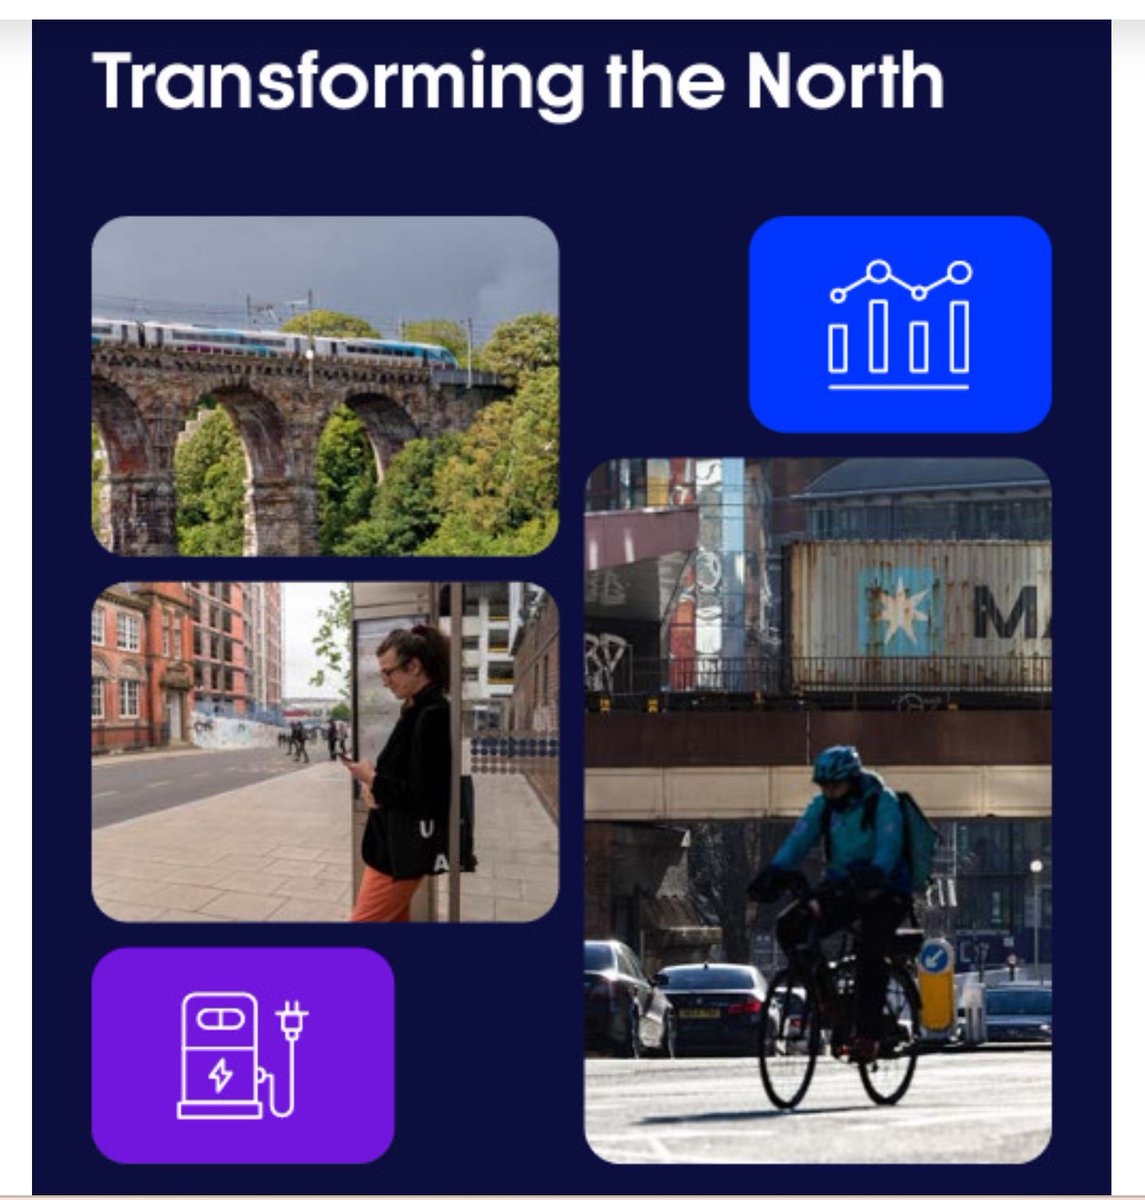 Some interesting, transformational stuff here!
#TransformTheNorth @Transport4North @CBTransport 
@TransportFocus @TransportActio2 @BRTANorthernEng @paultattam @Yorkshire_Party @yorkshirepost @CommunityRail @gvrua @Buxton_News @townteambuxton Read more at:-
chinleybuxworthtg.co.uk/blogs/transpor…